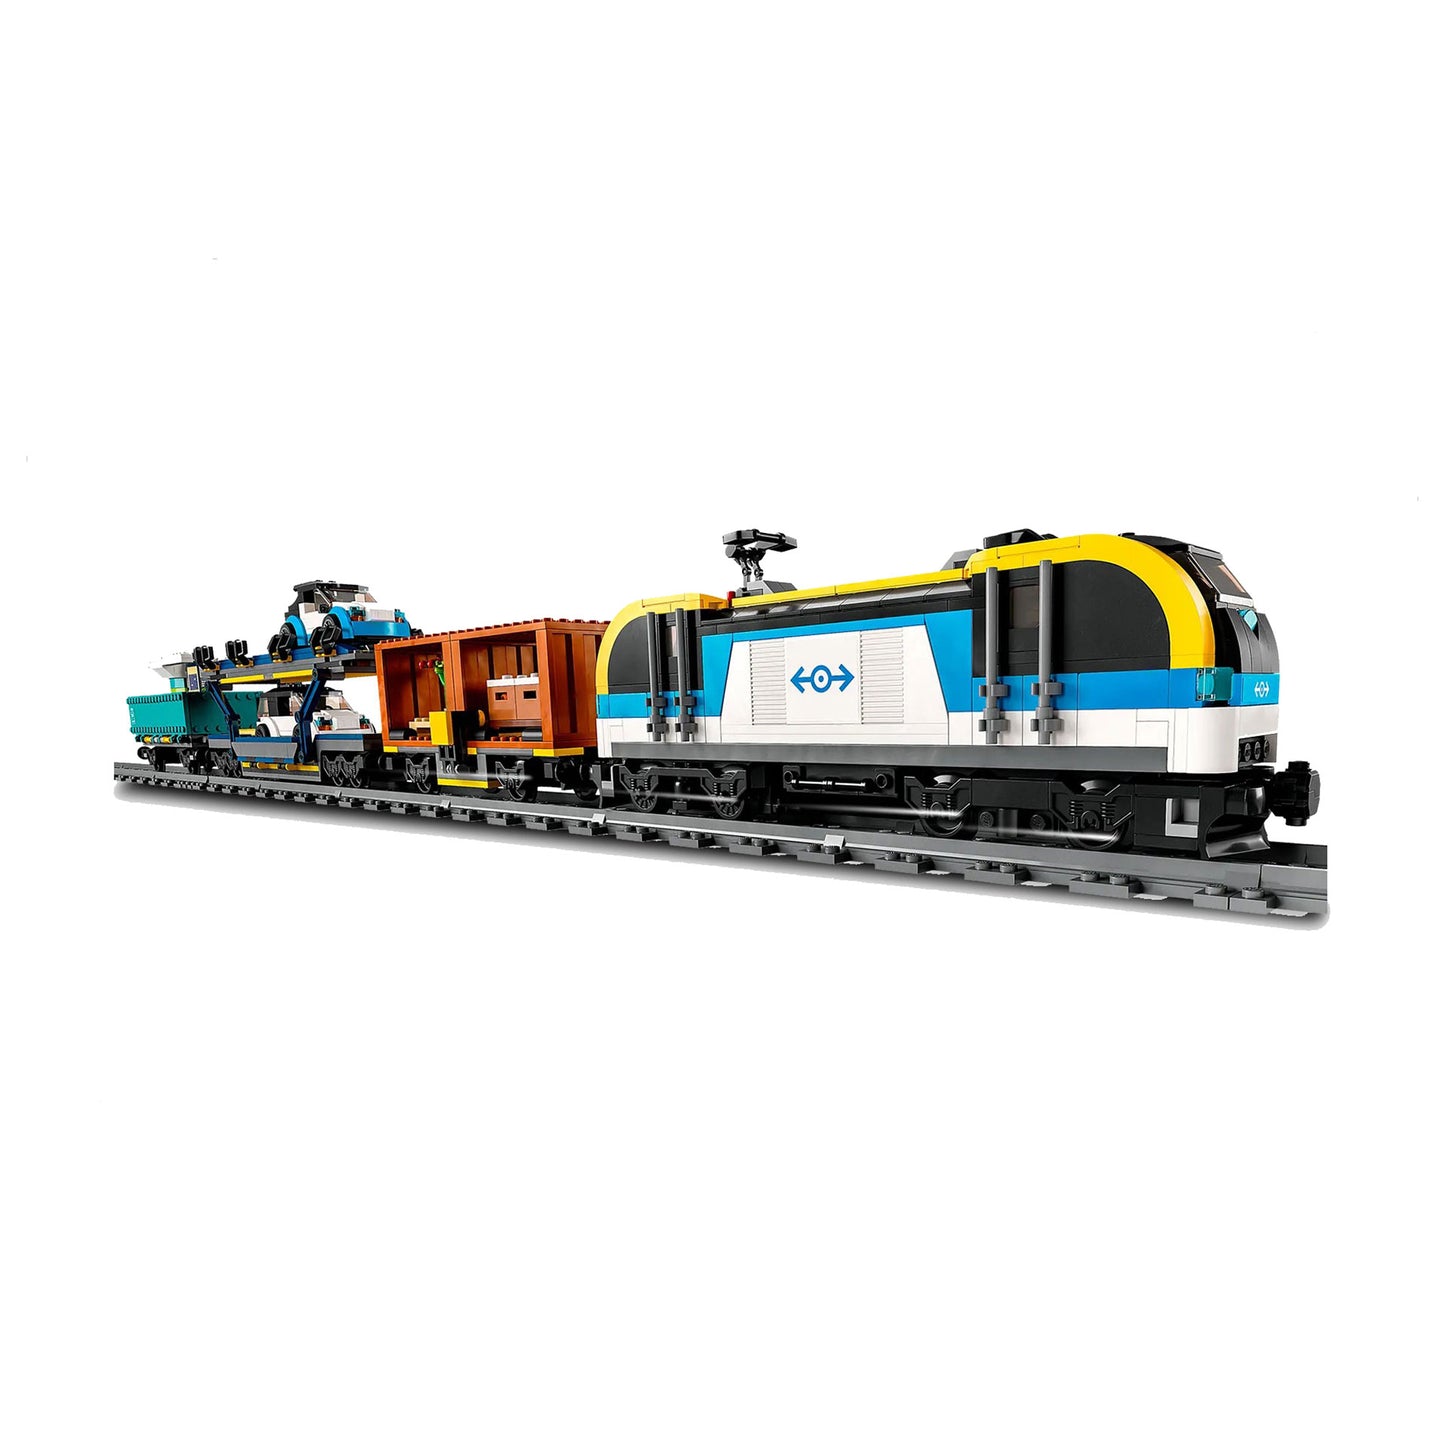 LEGO Freight Train